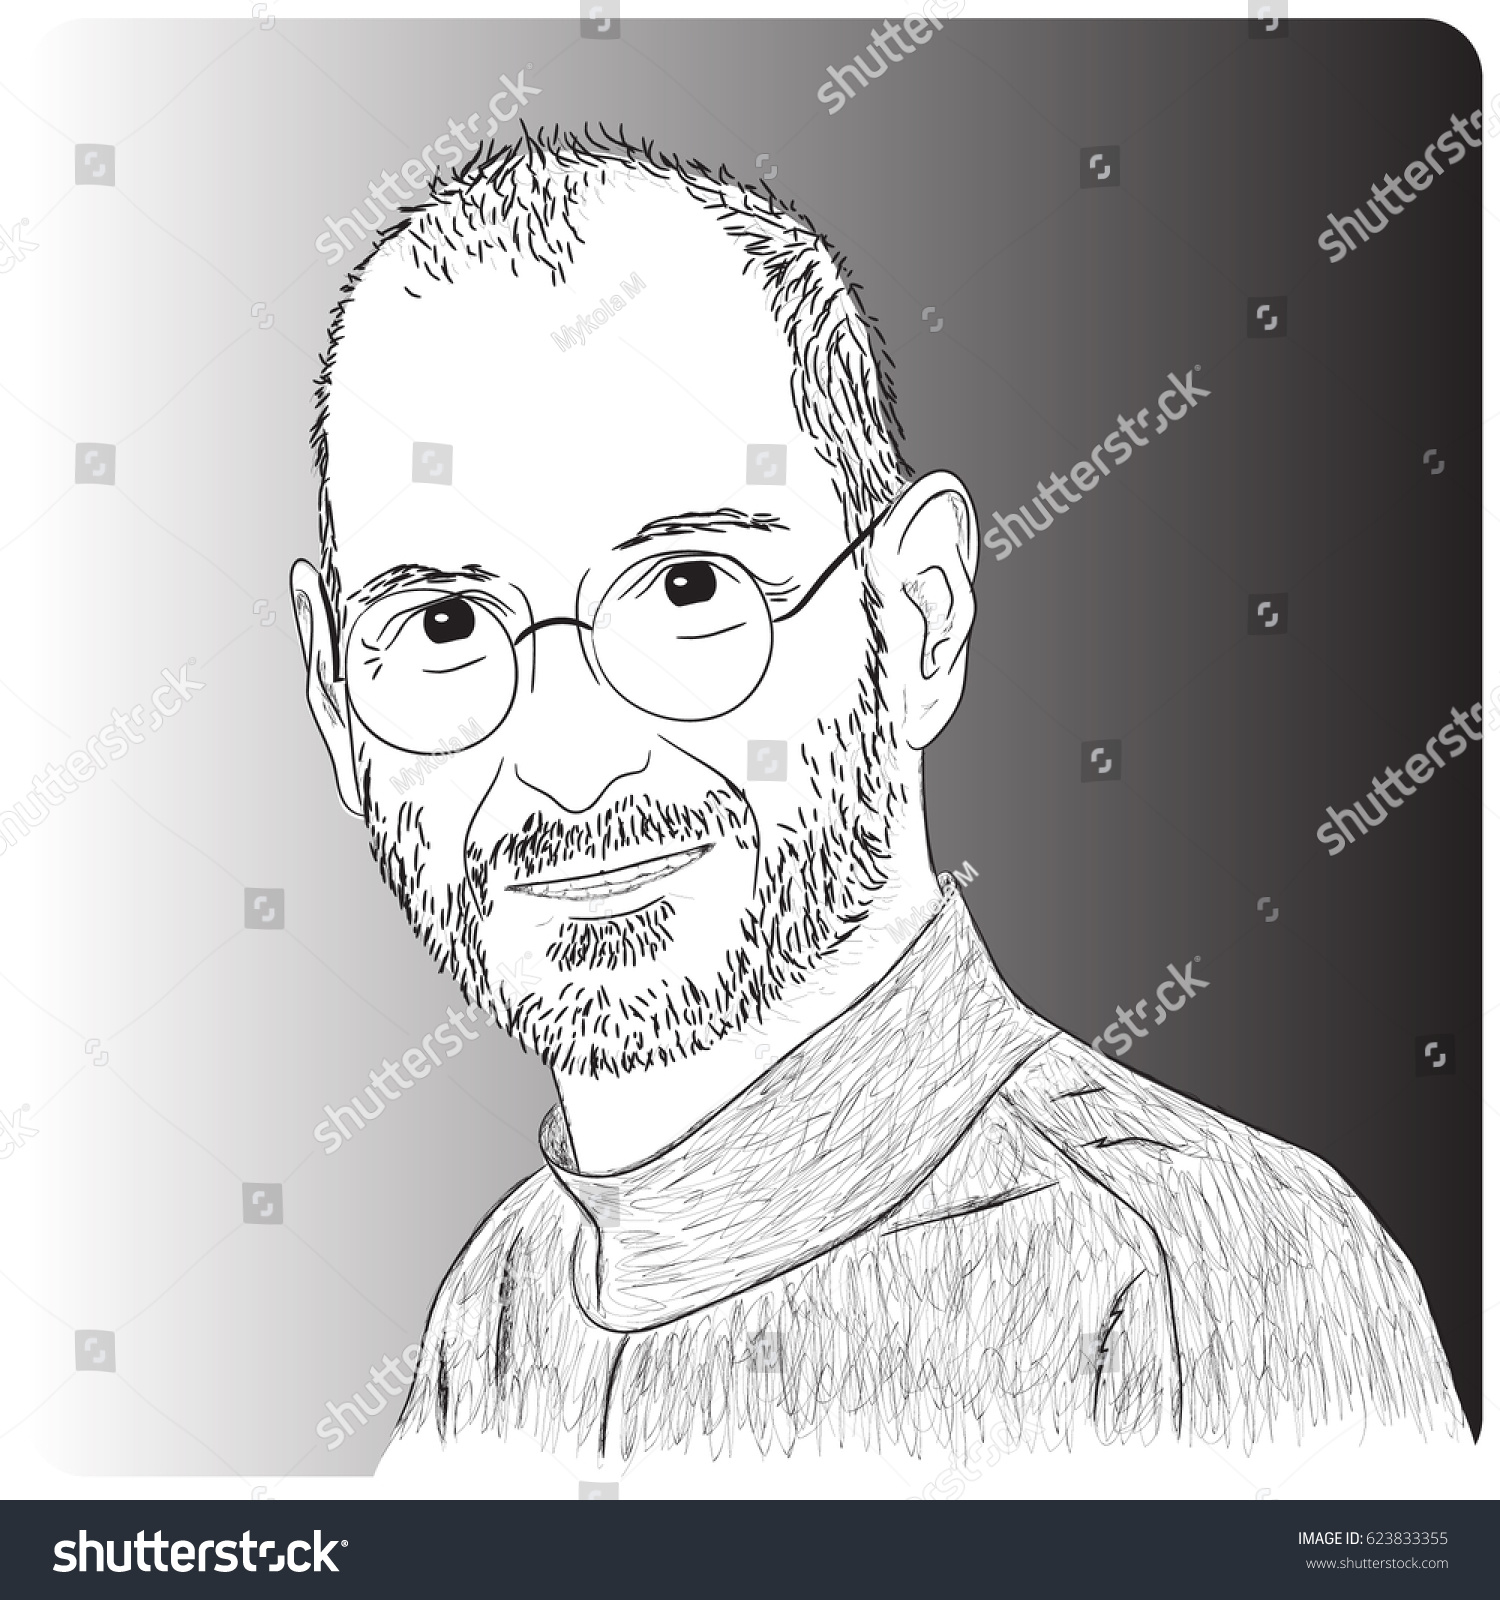 Portrait Steve Jobs Vector Illustration Stock Vector Royalty Free 623833355 2995